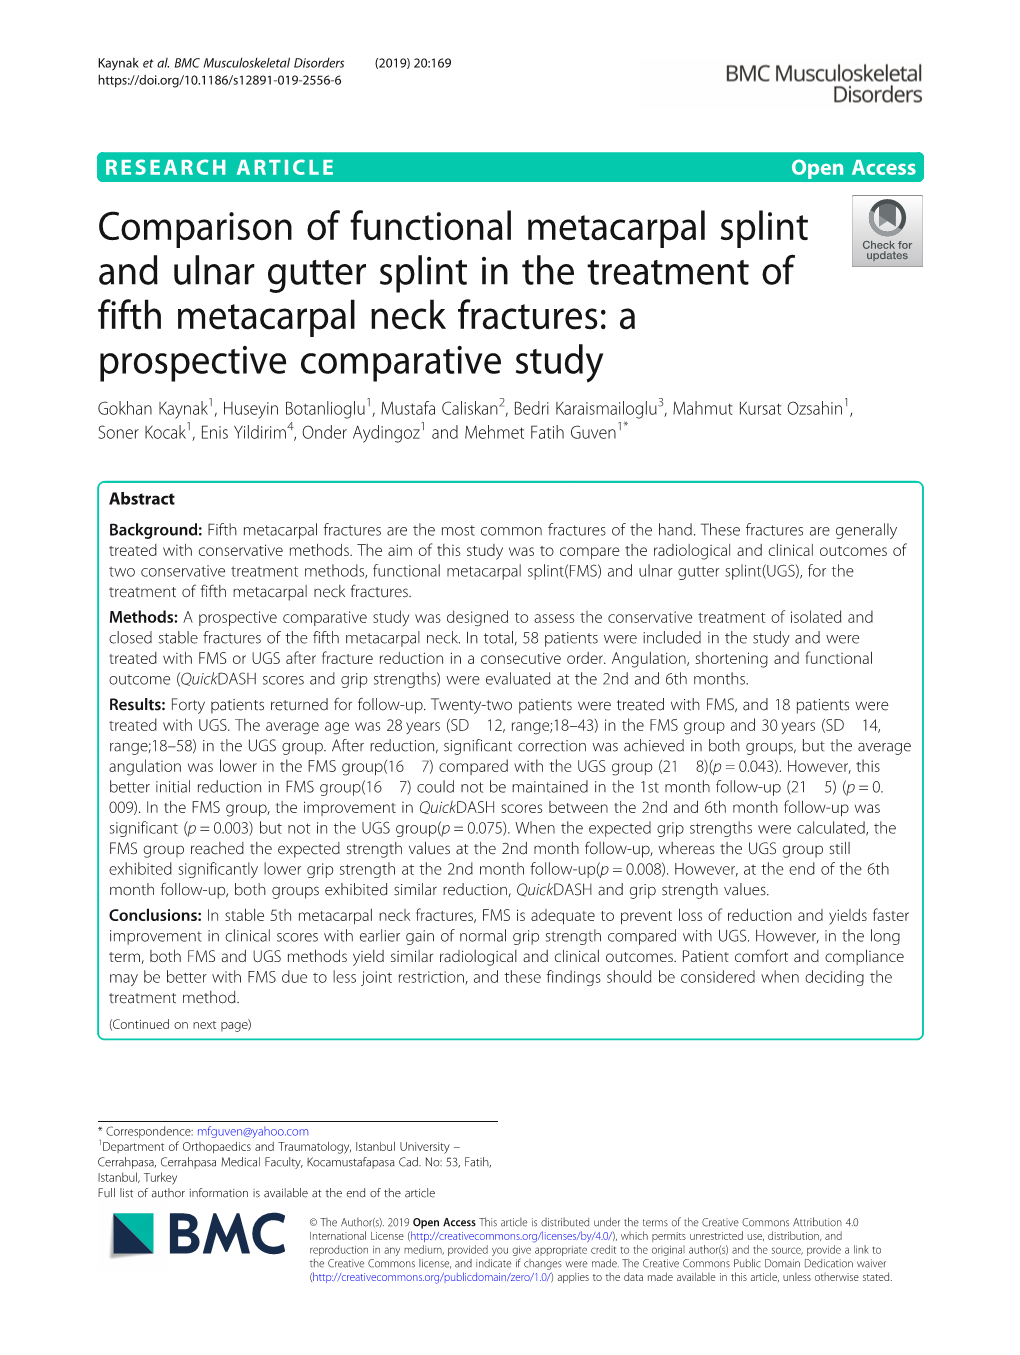 Comparison of Functional Metacarpal Splint and Ulnar Gutter Splint in the Treatment of Fifth Metacarpal Neck Fractures